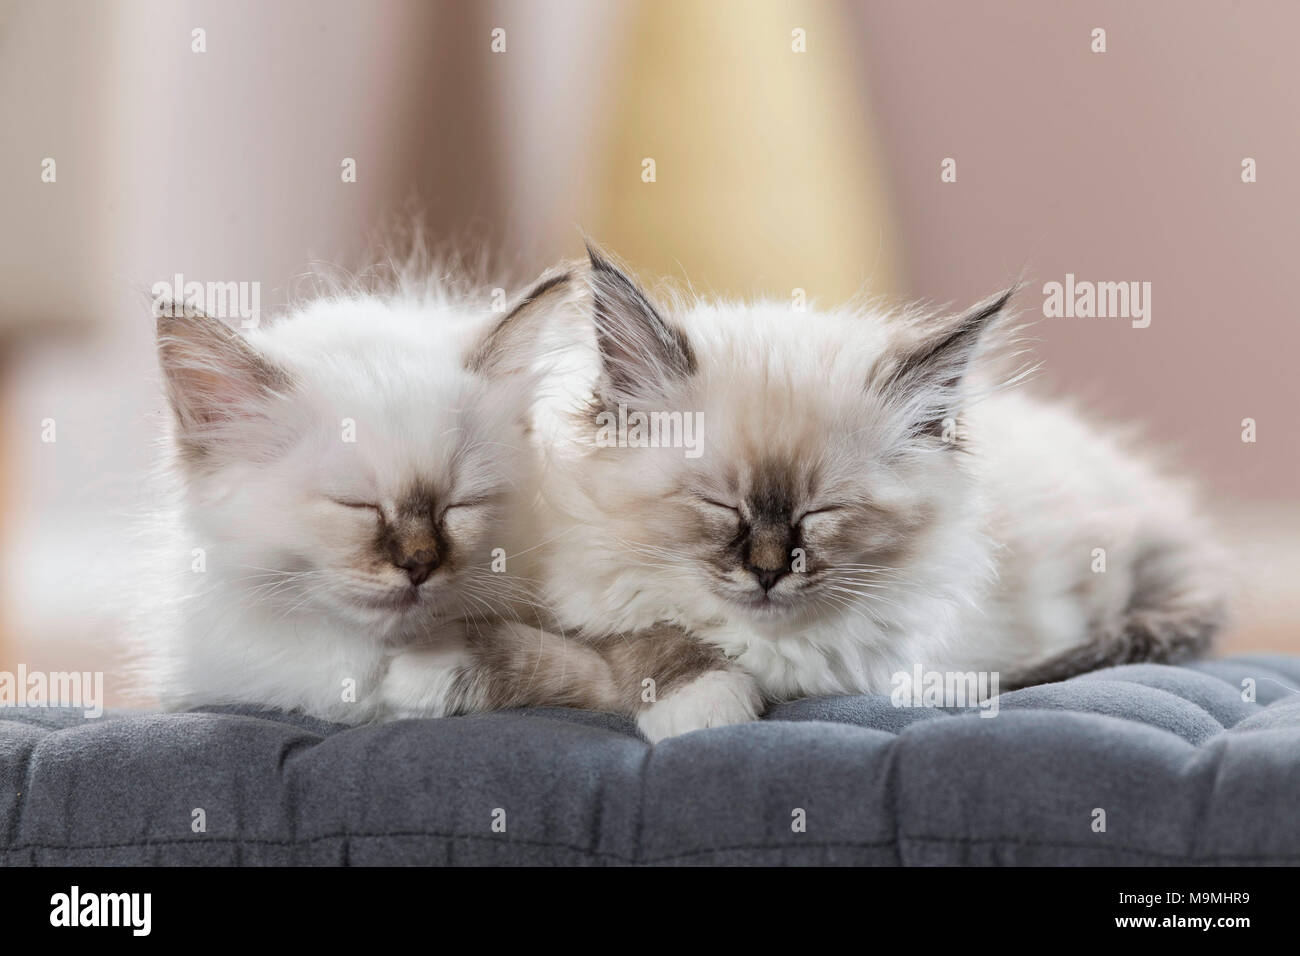 Sacred cat of Burma. Two kittens sleeping on a cushion. Germany Stock Photo